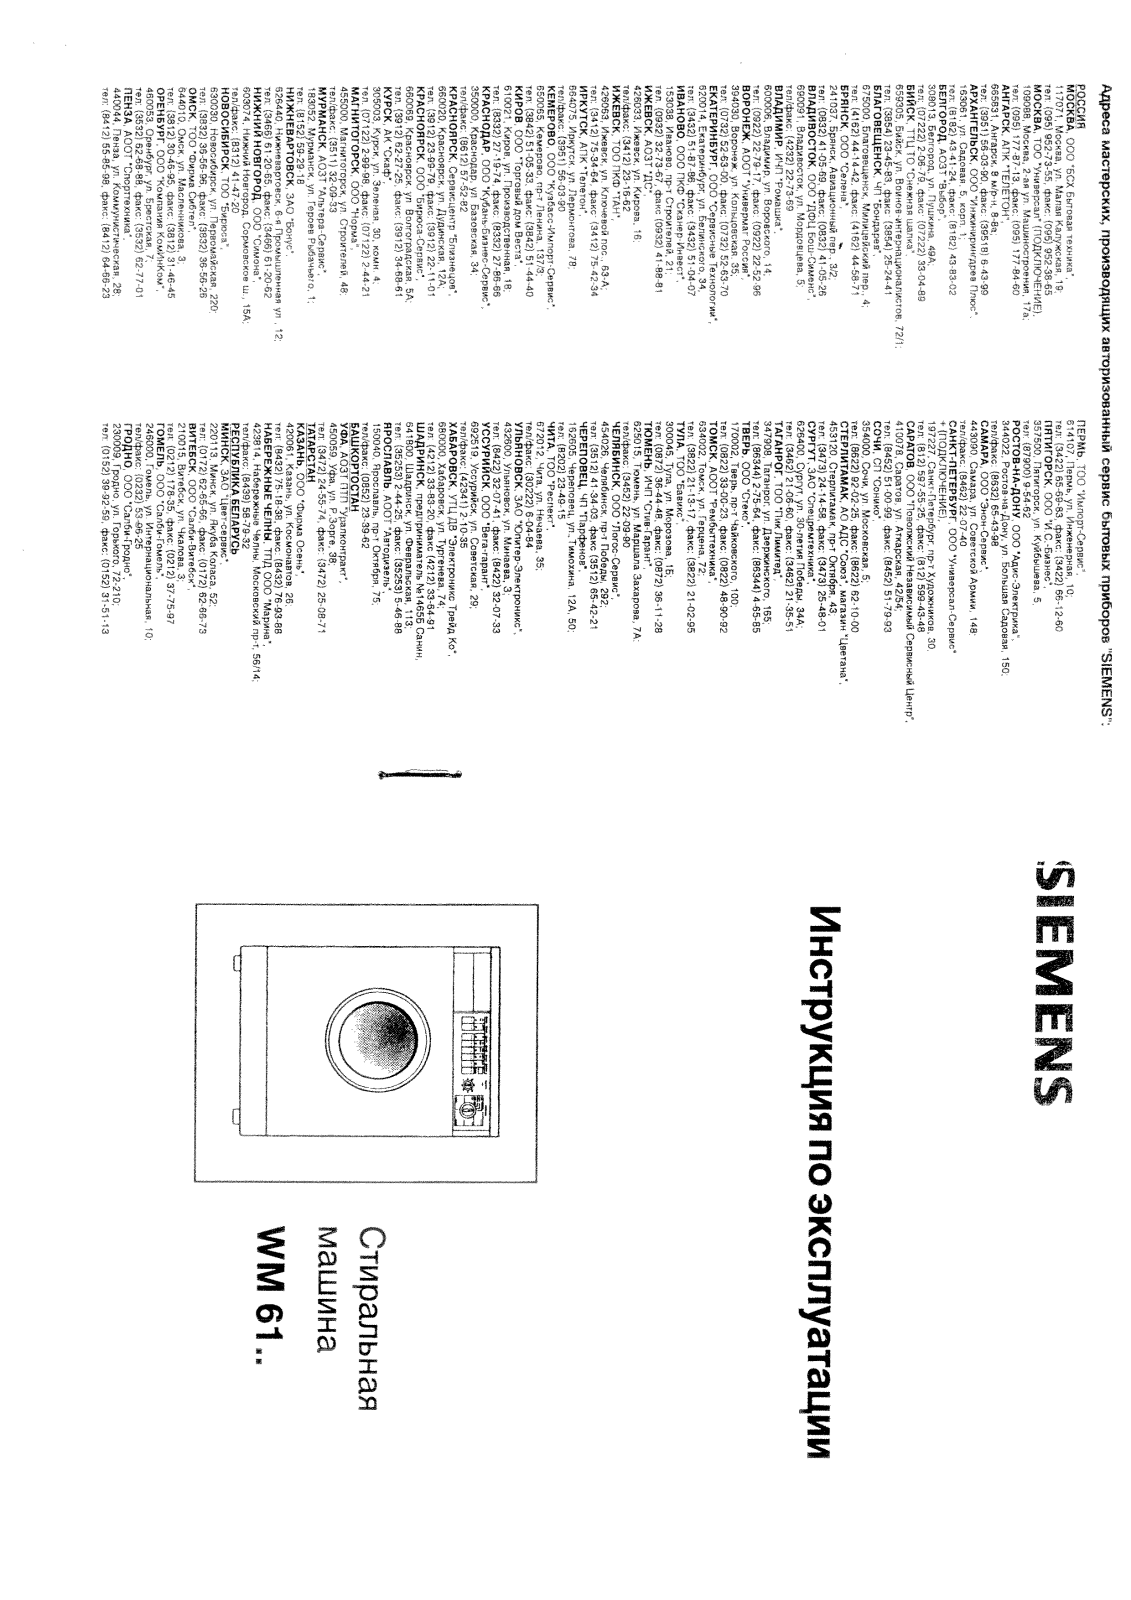 Siemens WM61201 User Manual